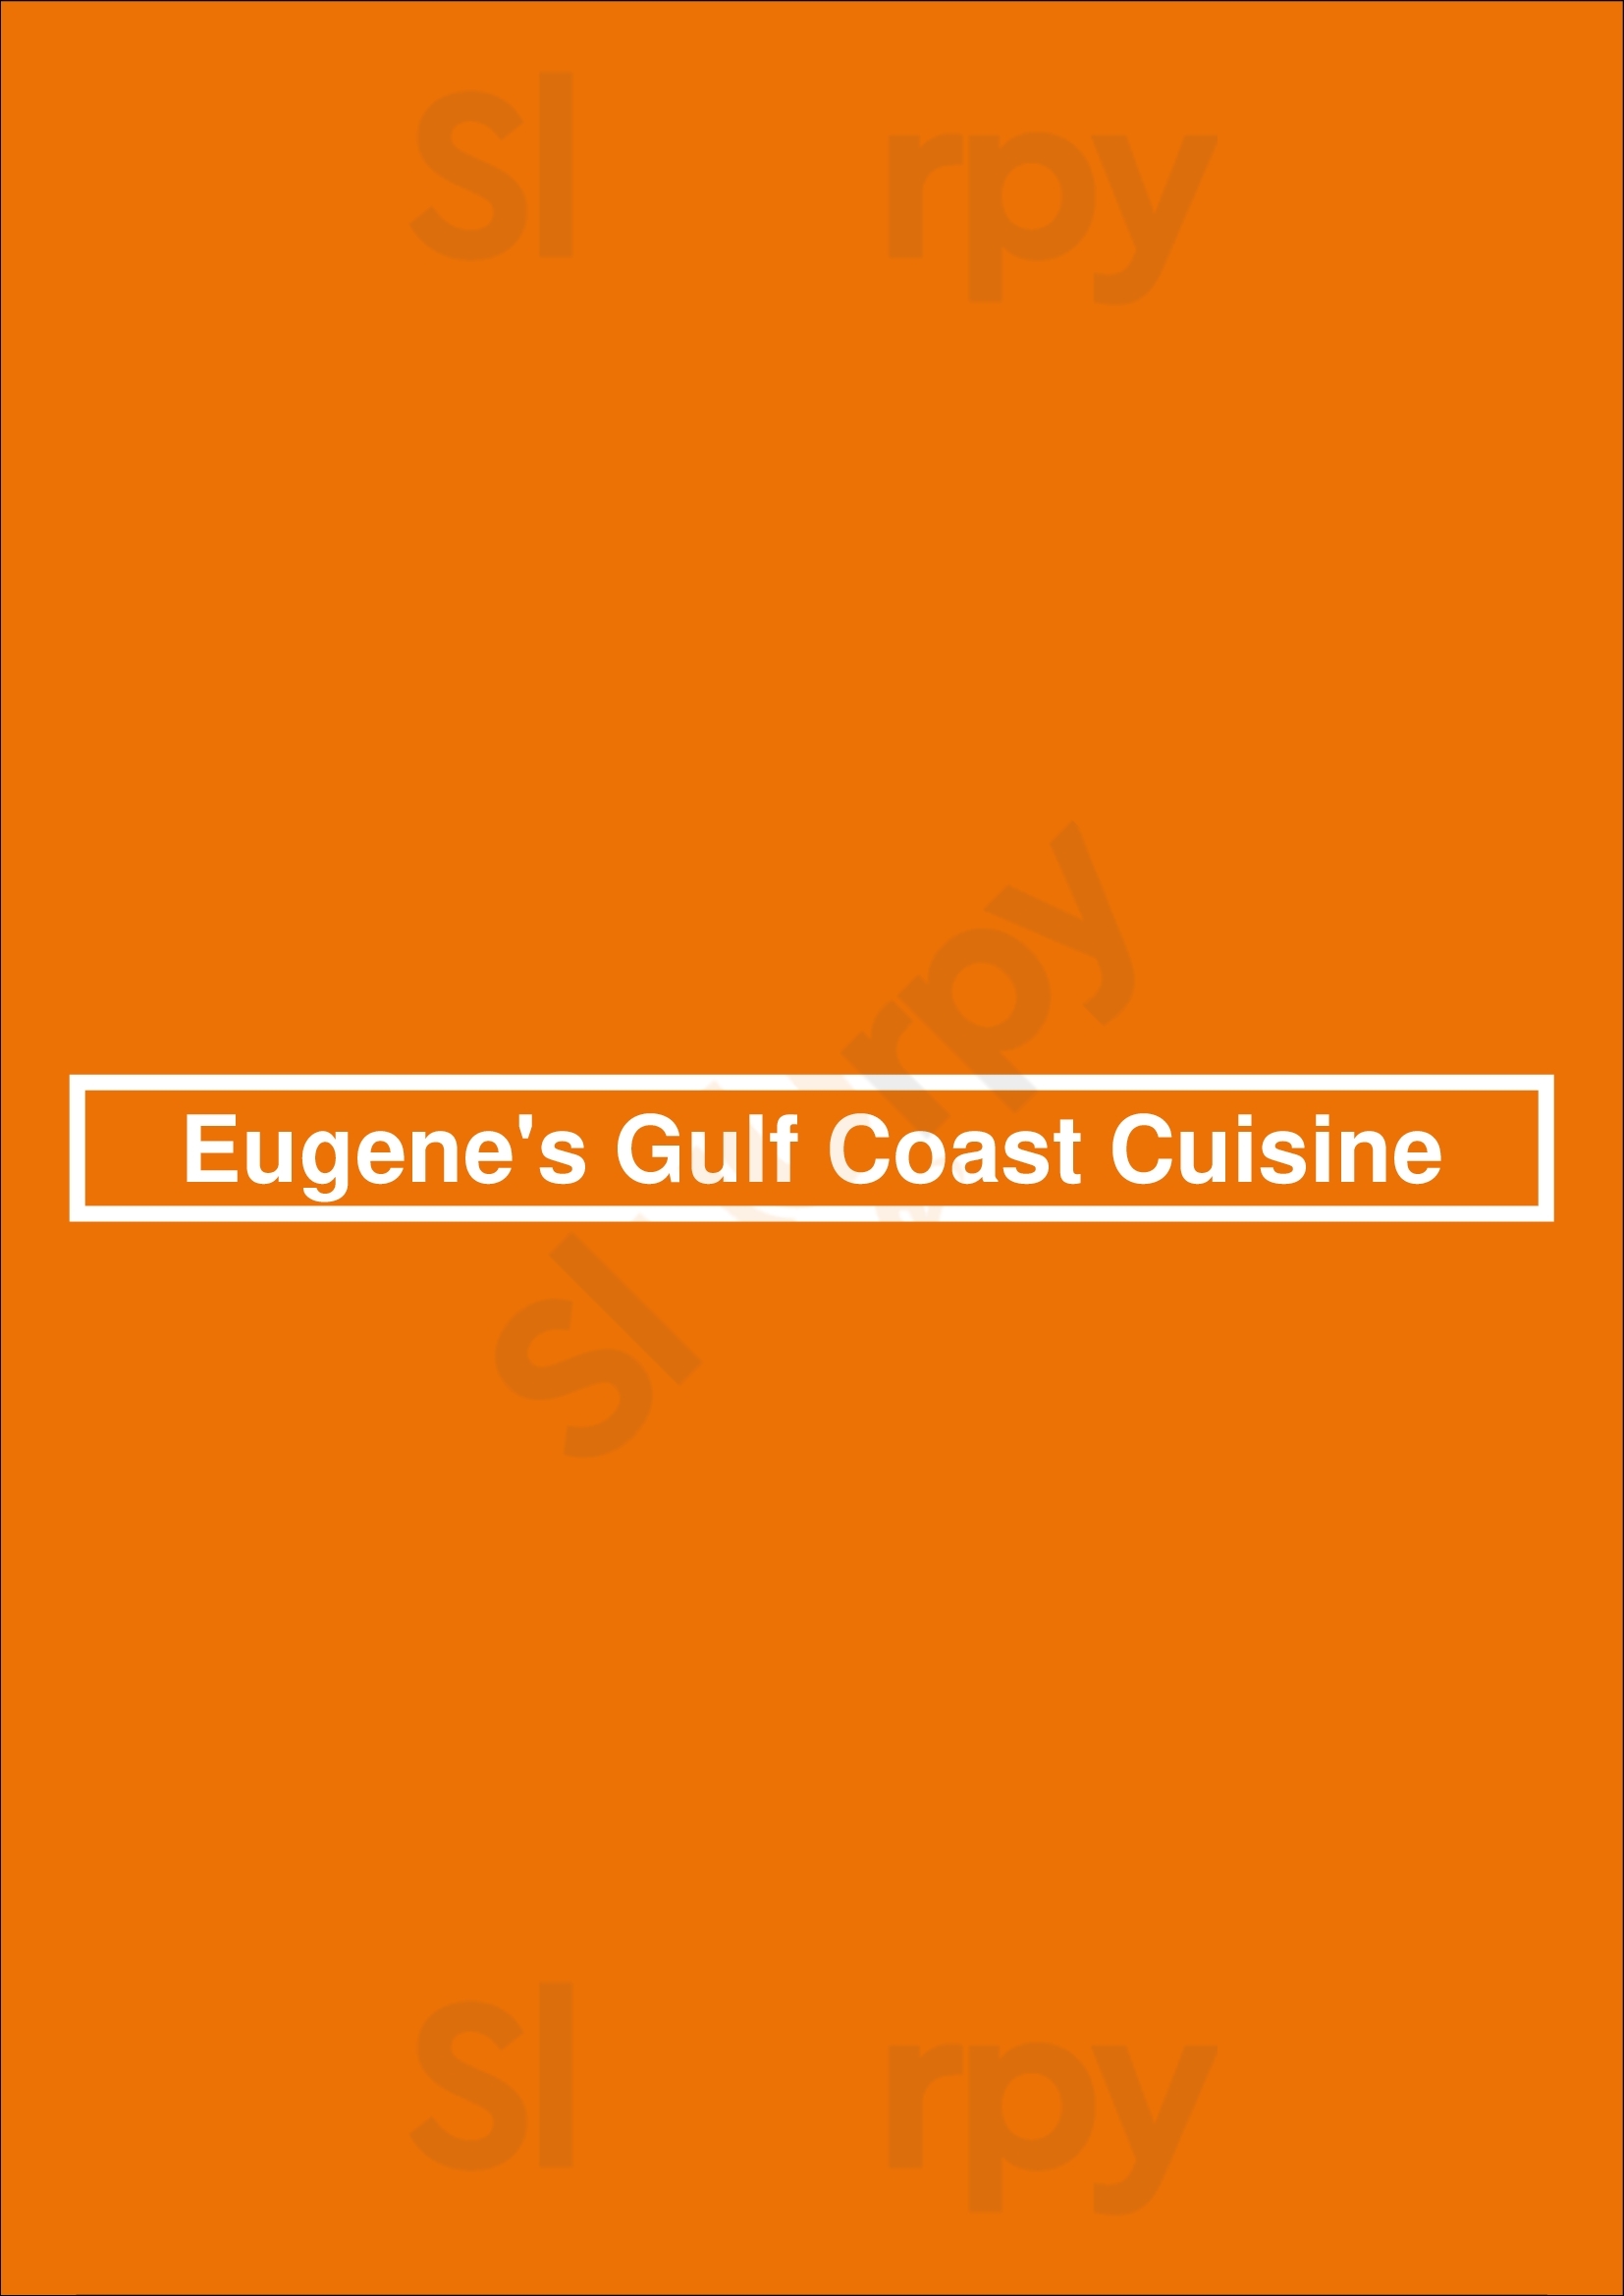 Eugene's Gulf Coast Cuisine Houston Menu - 1